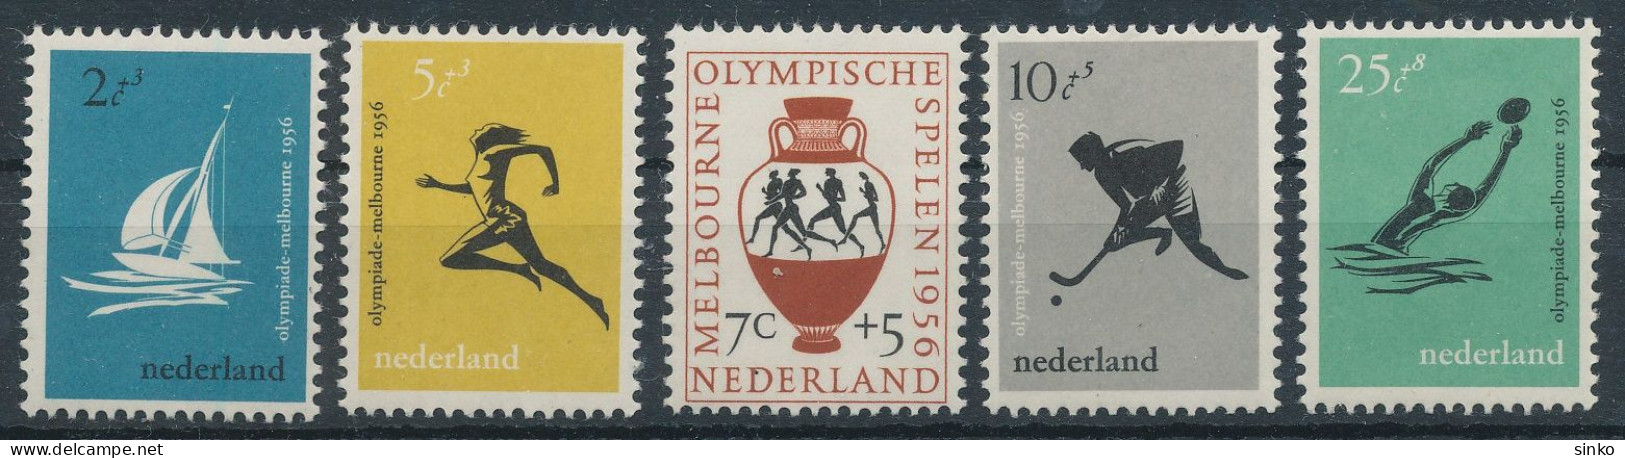 1956. Netherlands - Olympics - Ete 1956: Melbourne